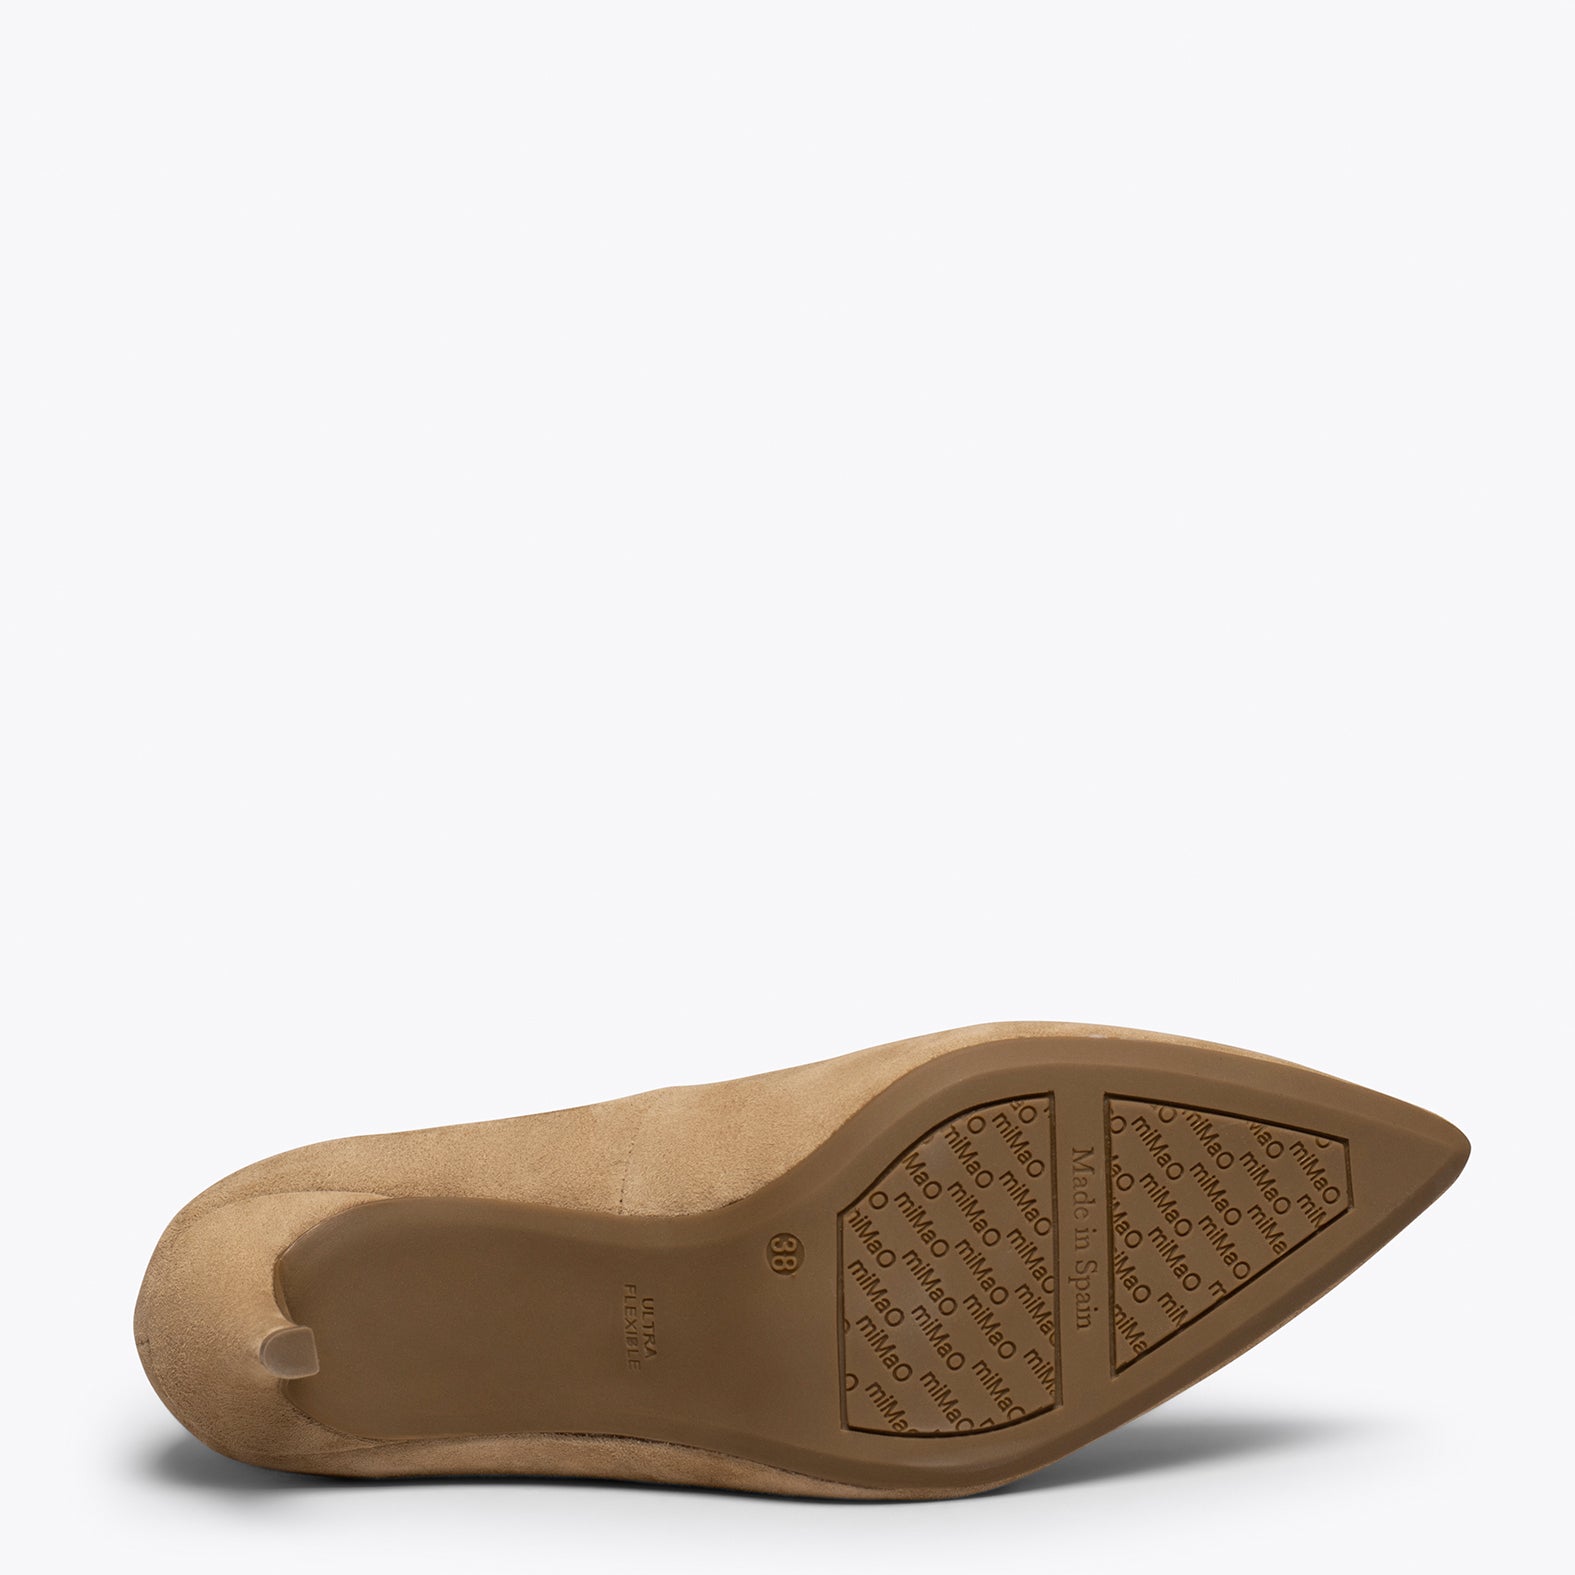 STILETTO – BEIGE stiletto mid heel